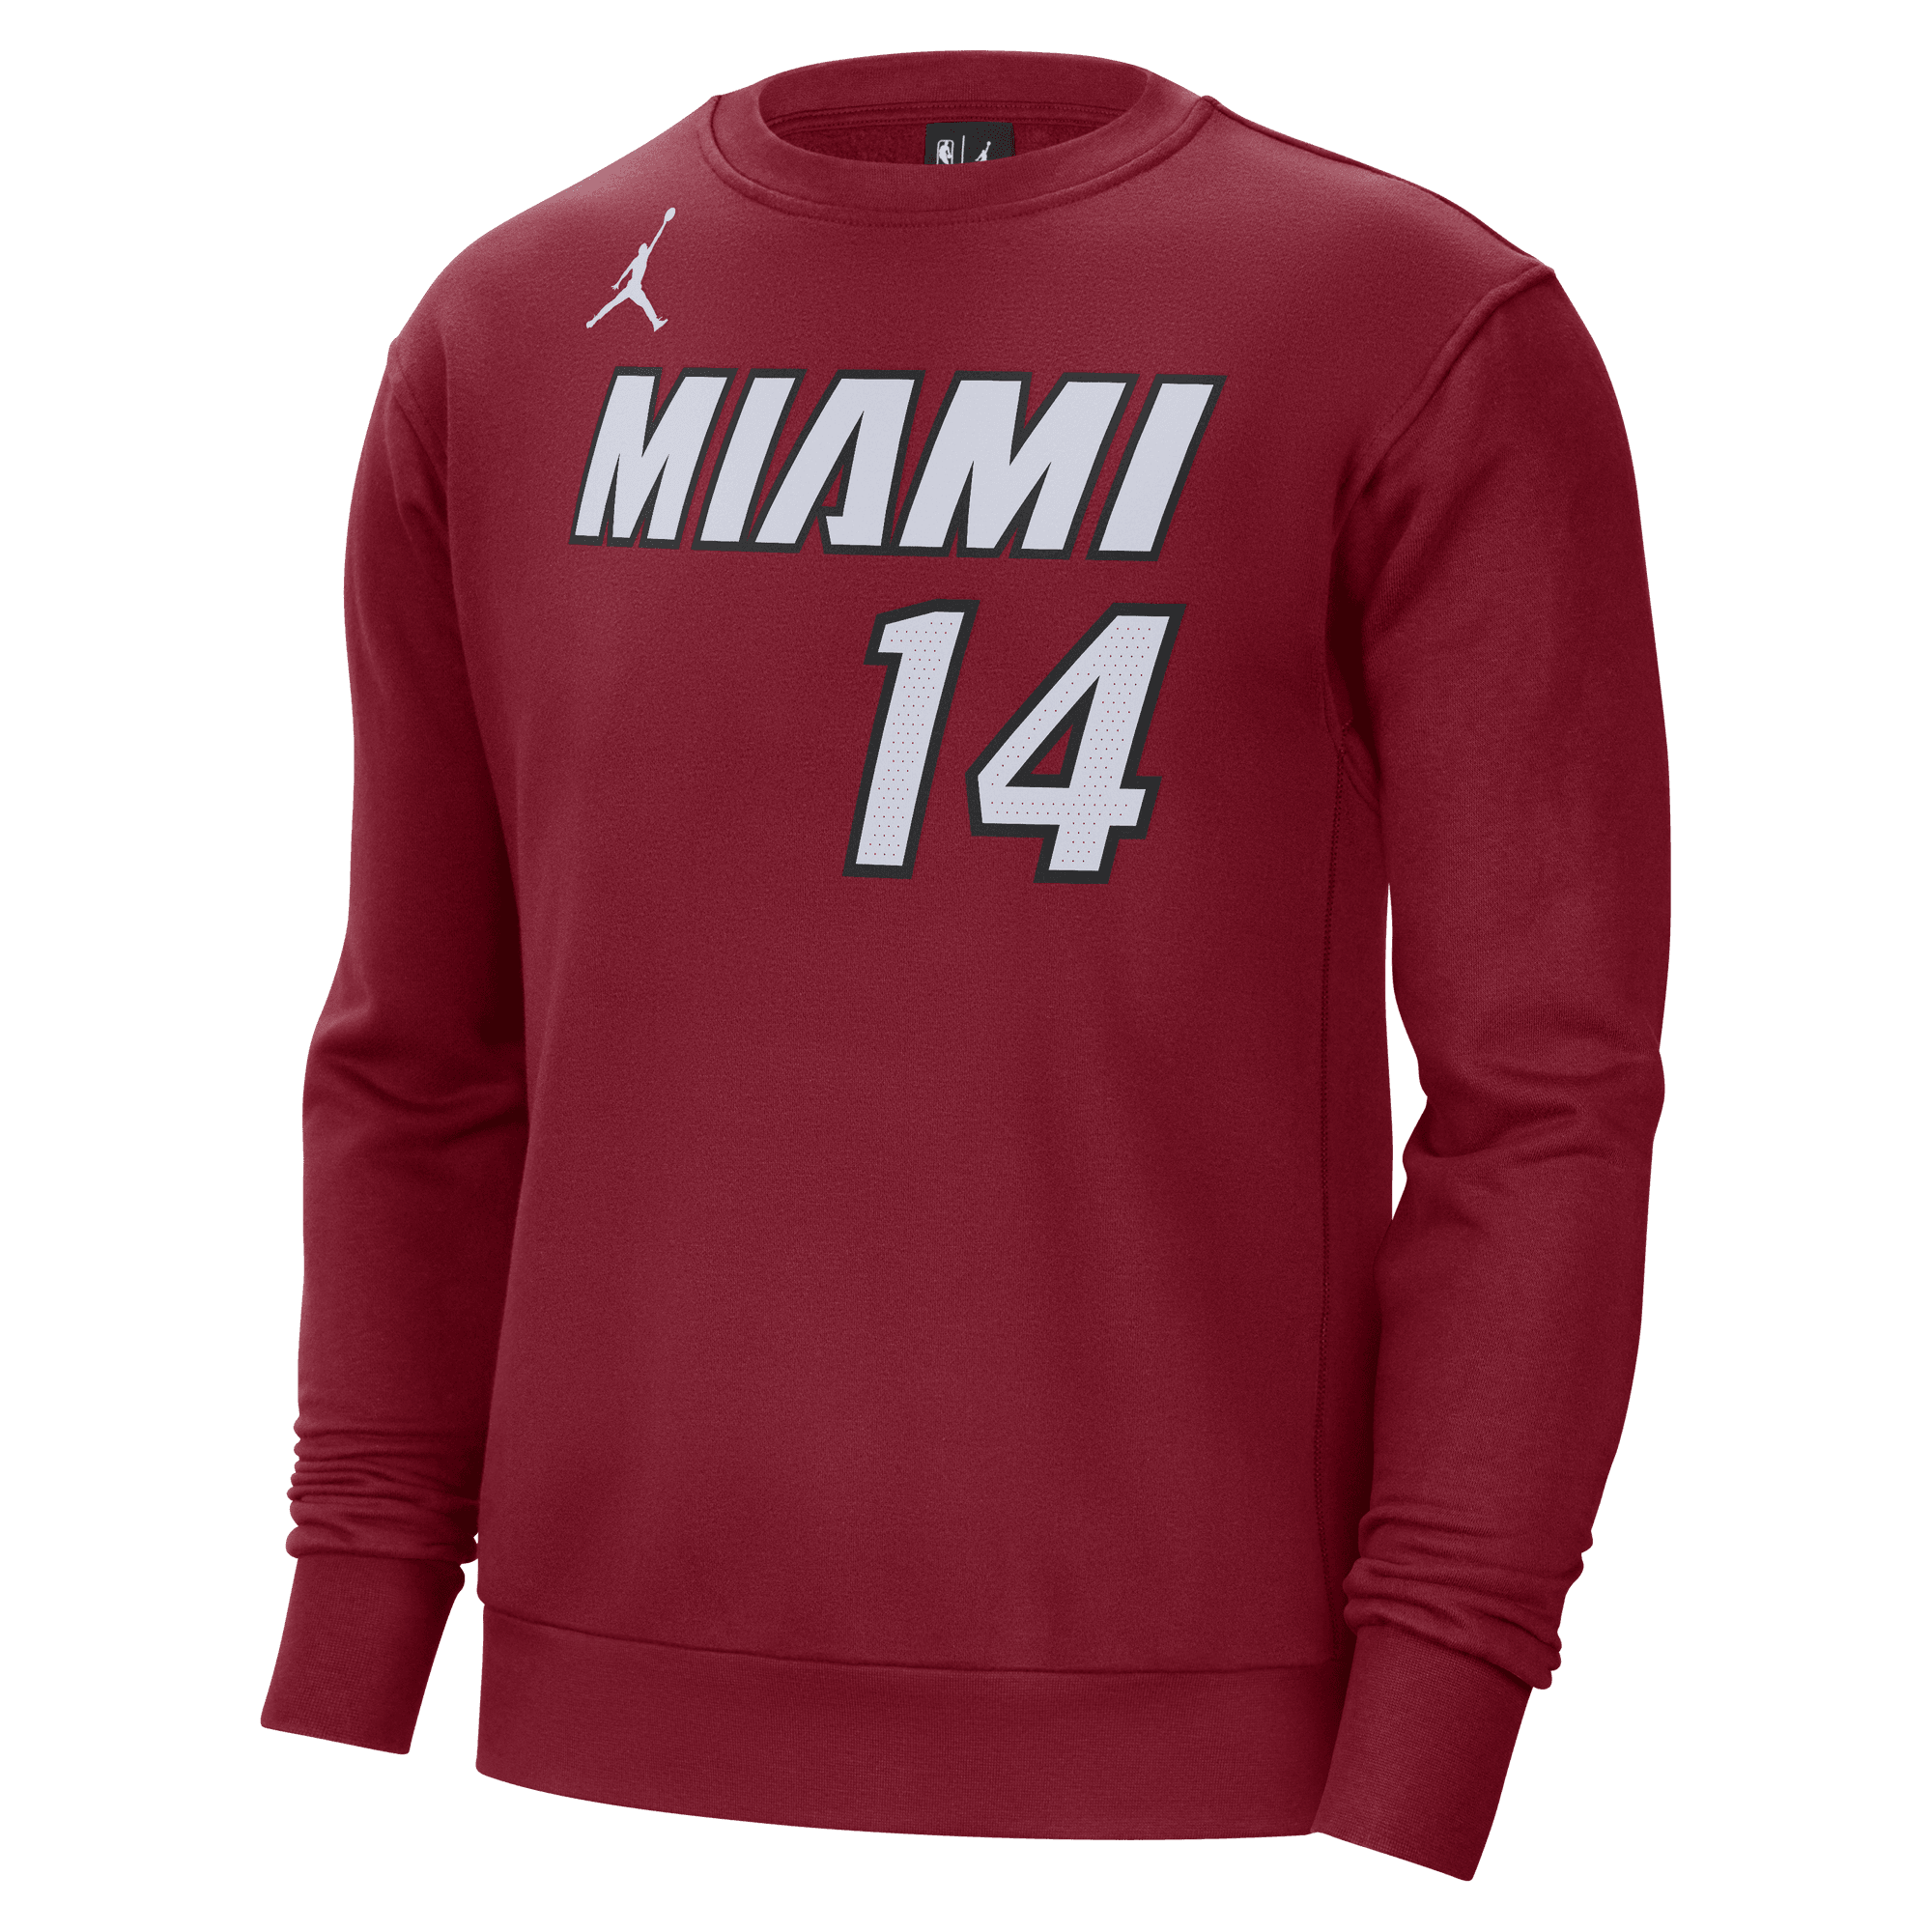 Tyler Herro Nike Miami Mashup Vol. 2 Name & Number Tee